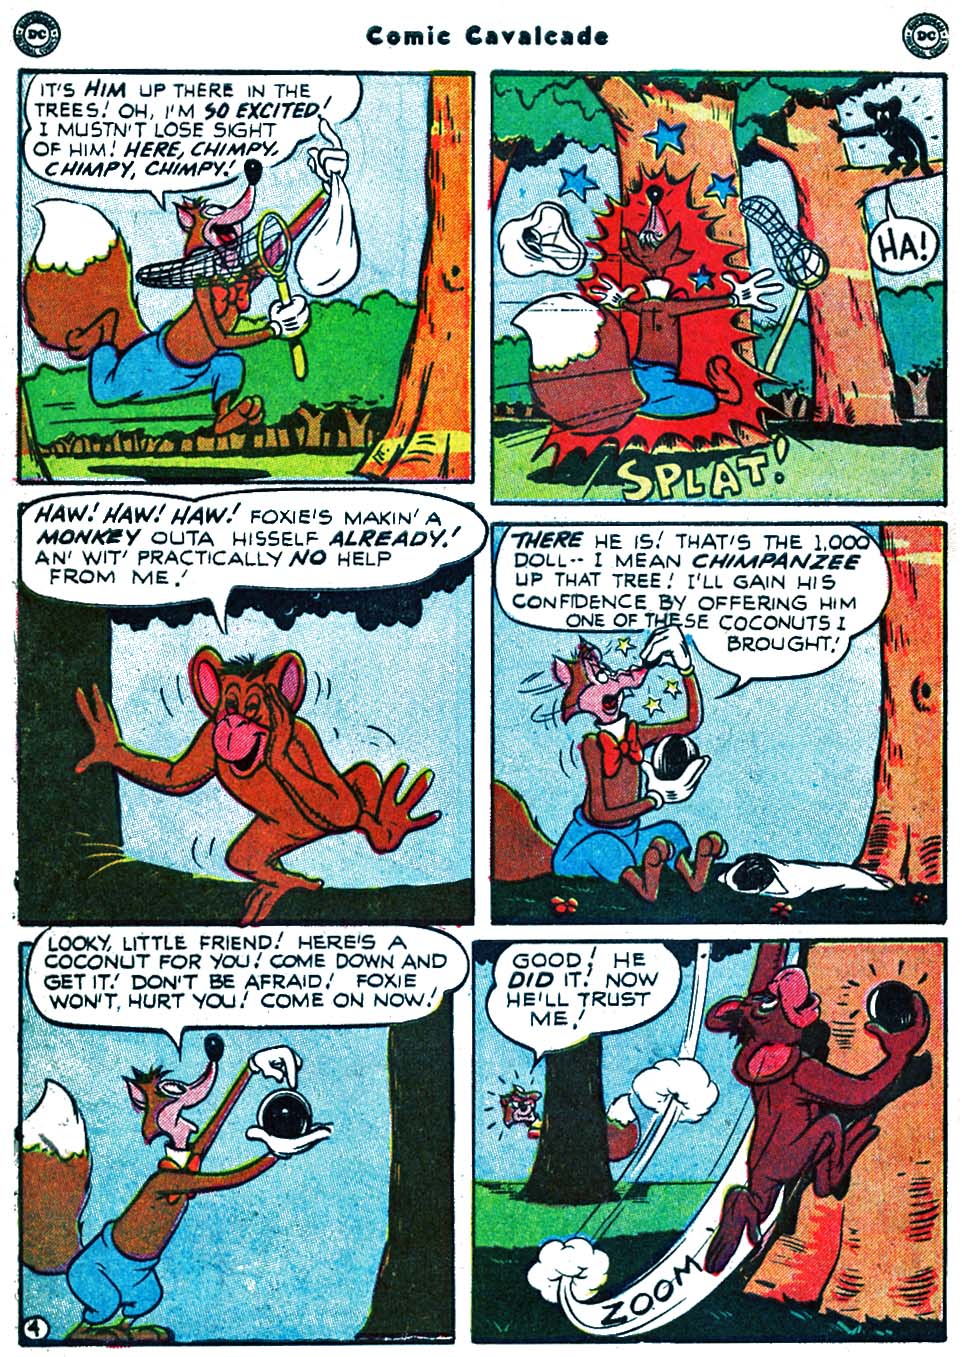 Comic Cavalcade issue 42 - Page 6